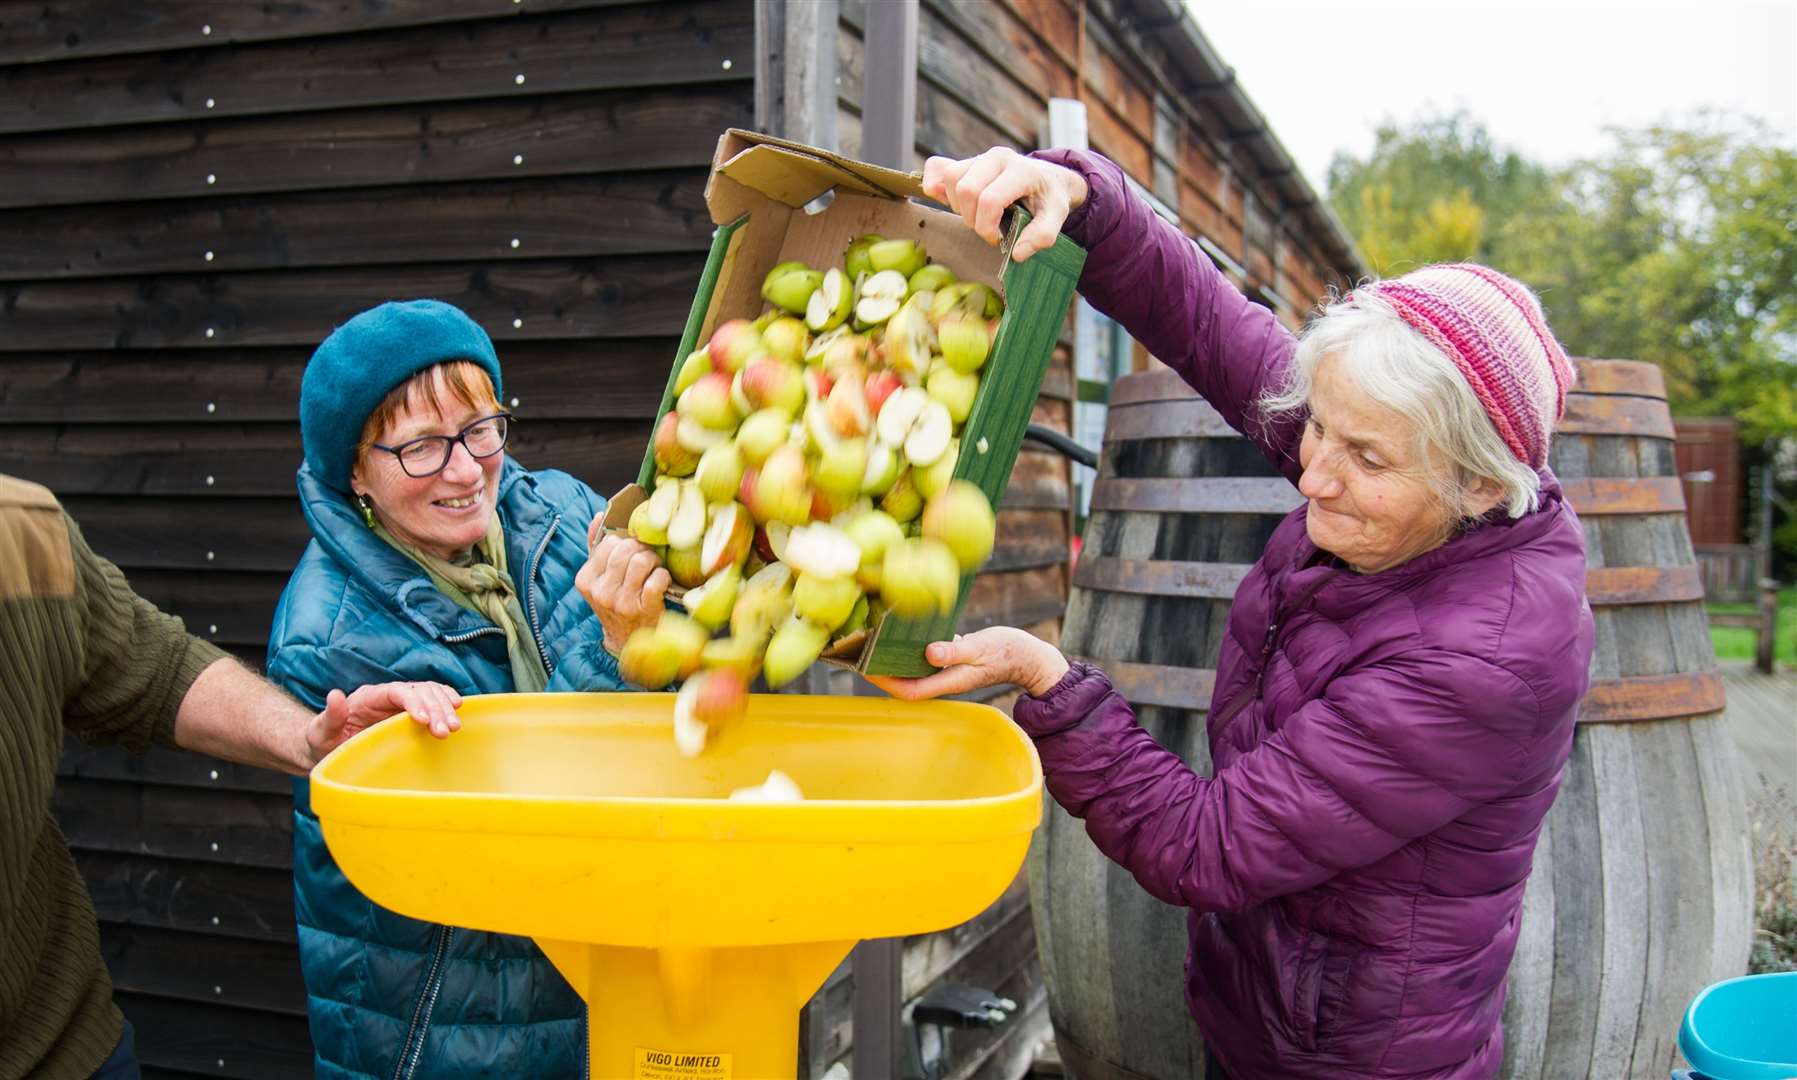 Greta Bergman and Daphne Francis pouring apples into a shredder.